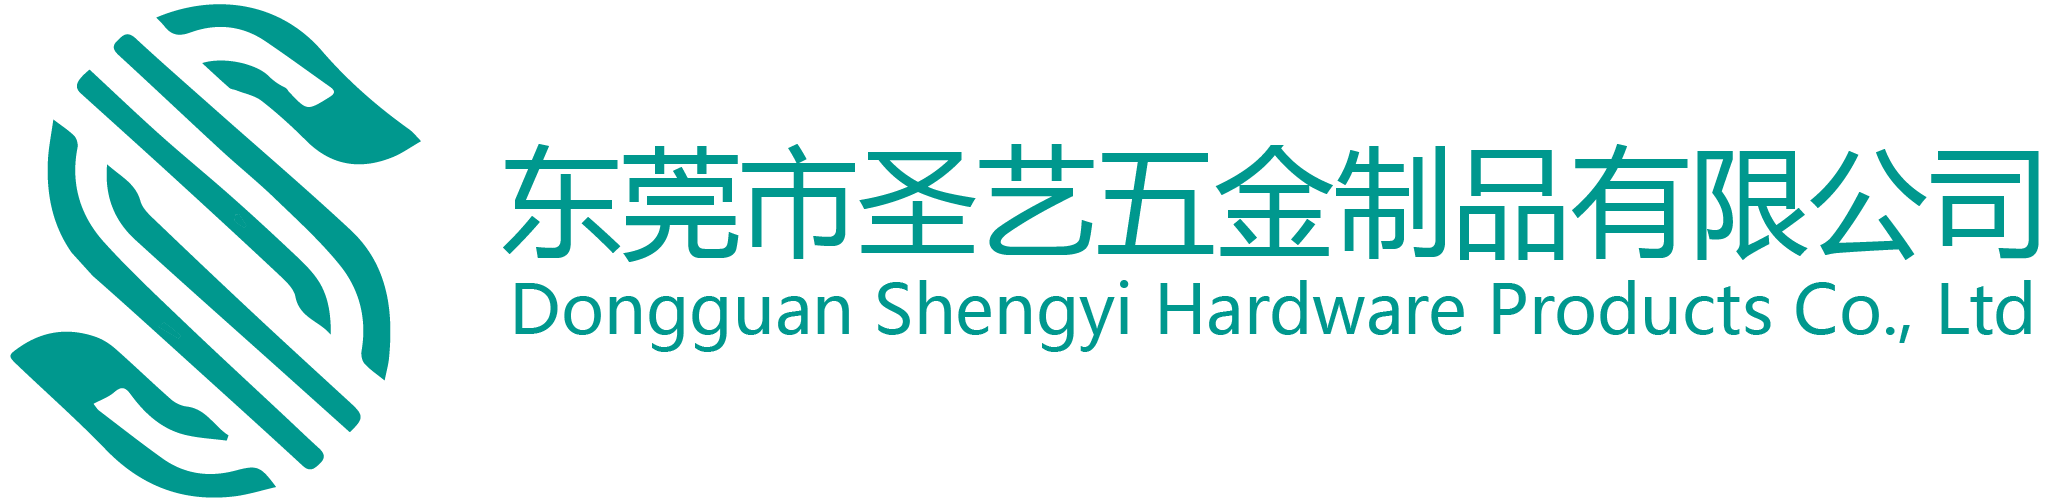 Dongguan Shengyi Hardware Products Co., Ltd 东莞市圣艺五金制品有限公司